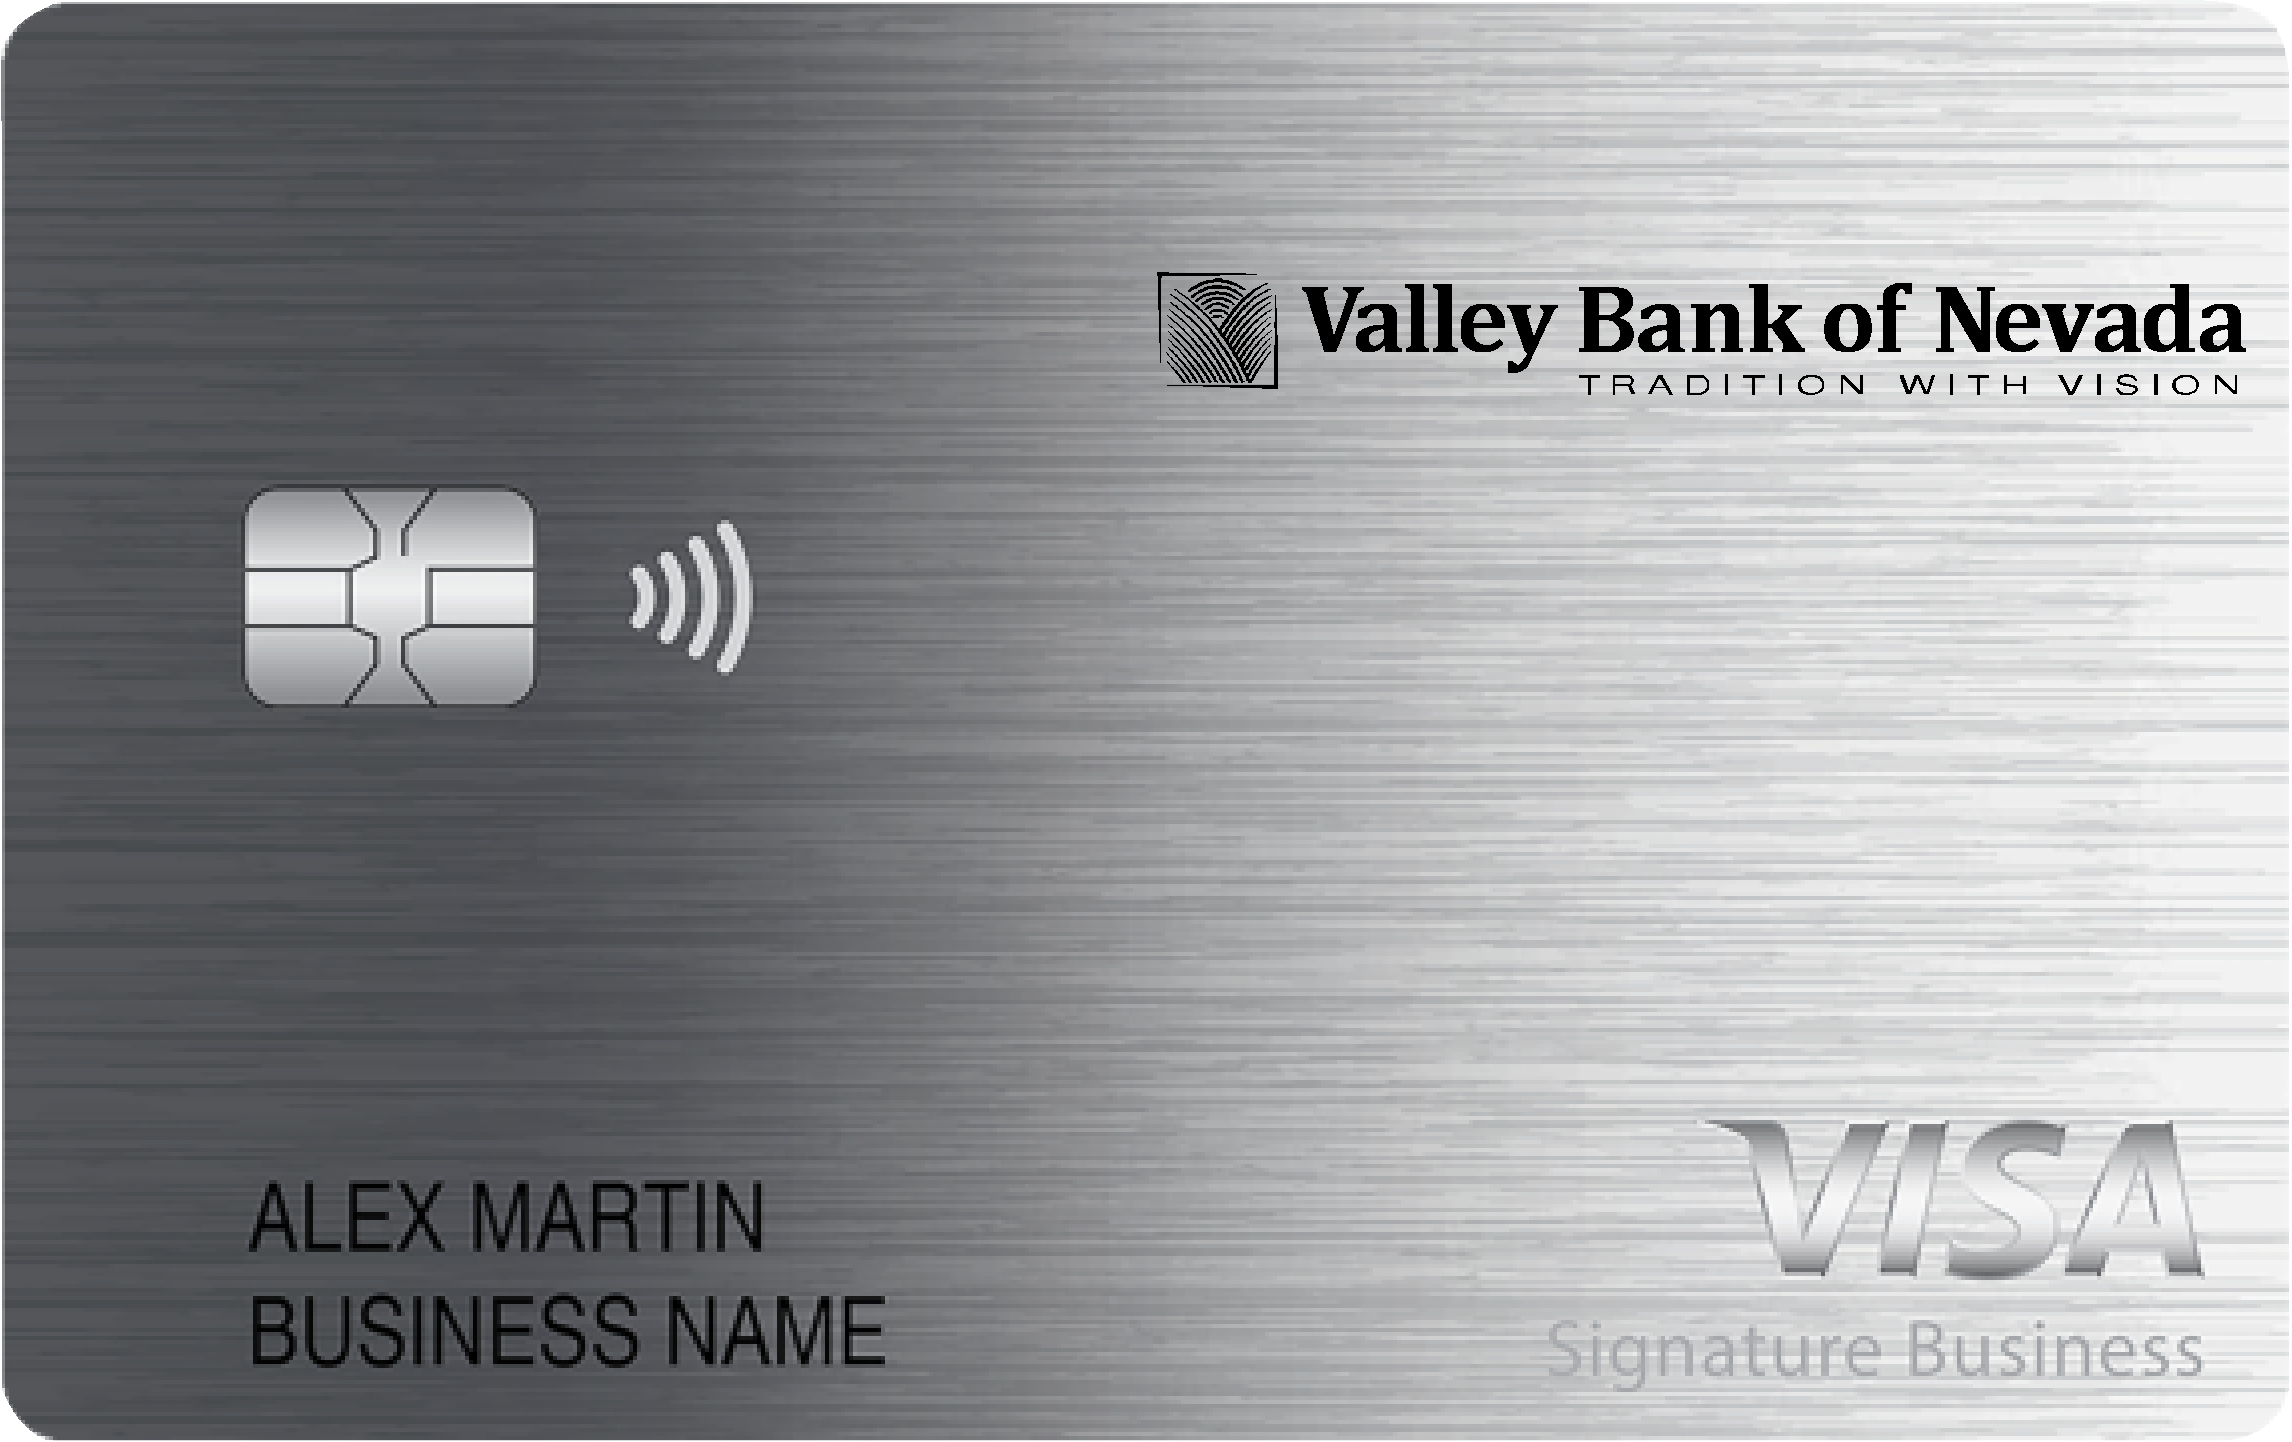 Valley Bank of Nevada Smart Business Rewards Card